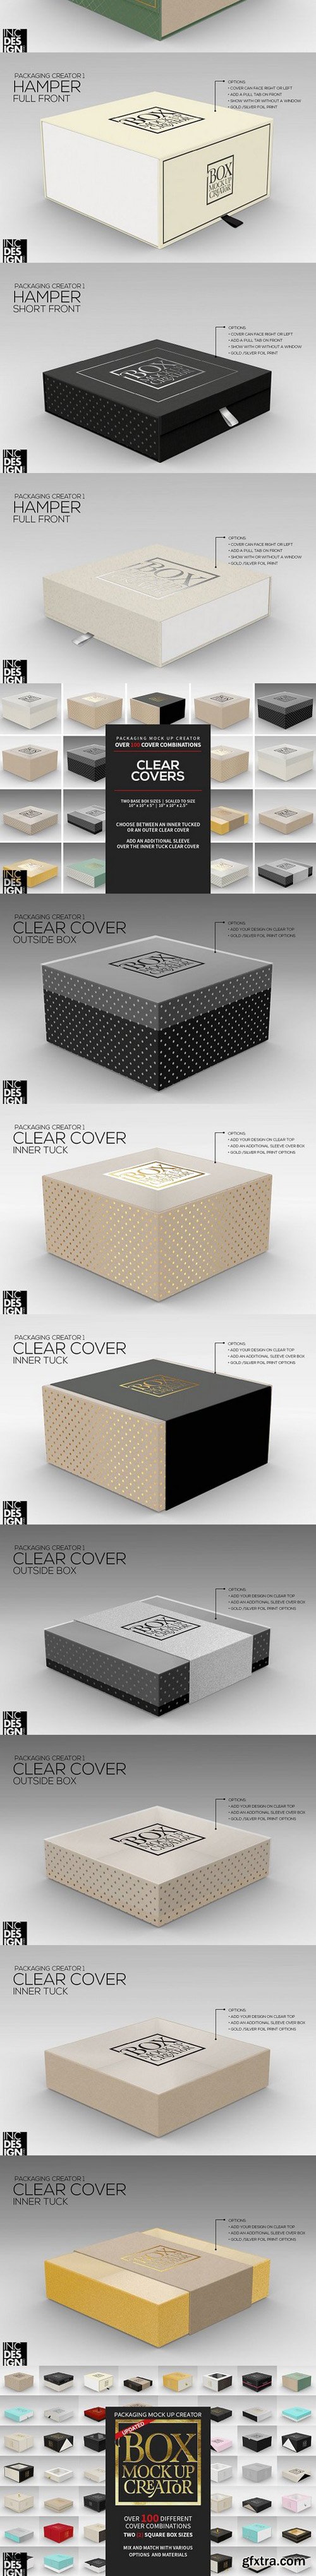 Box Packaging MockUp Creator 1